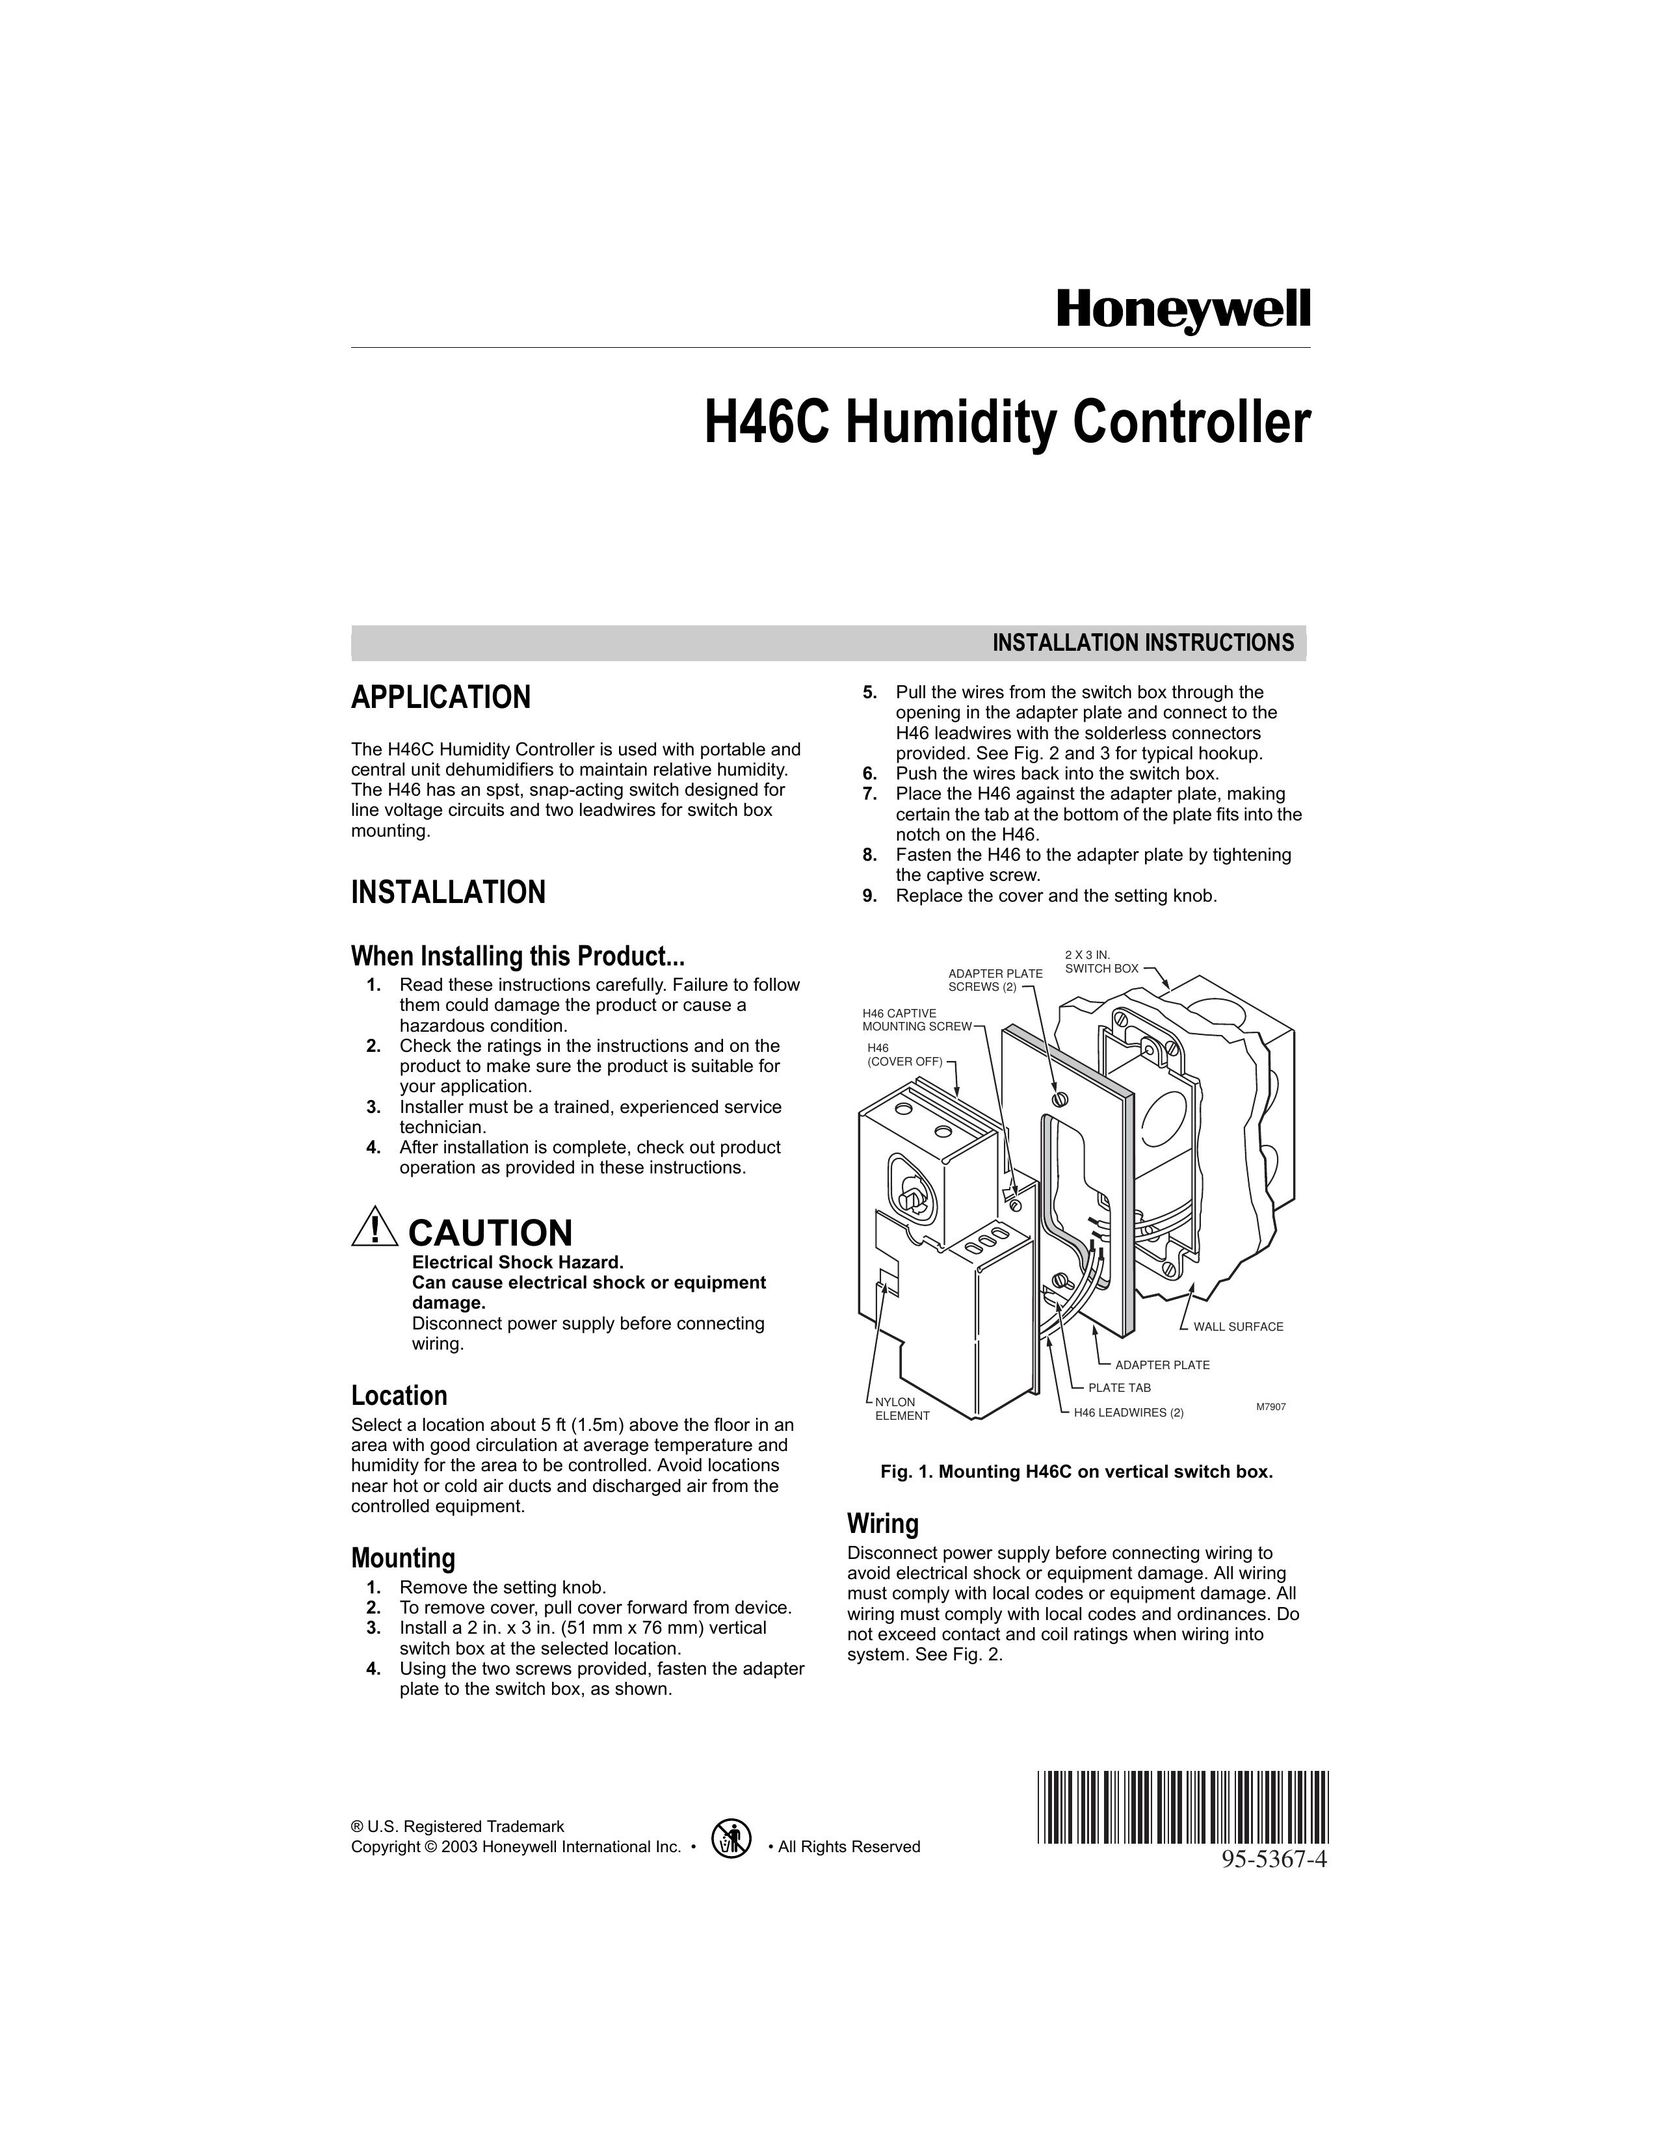 Honeywell H46C Dehumidifier User Manual